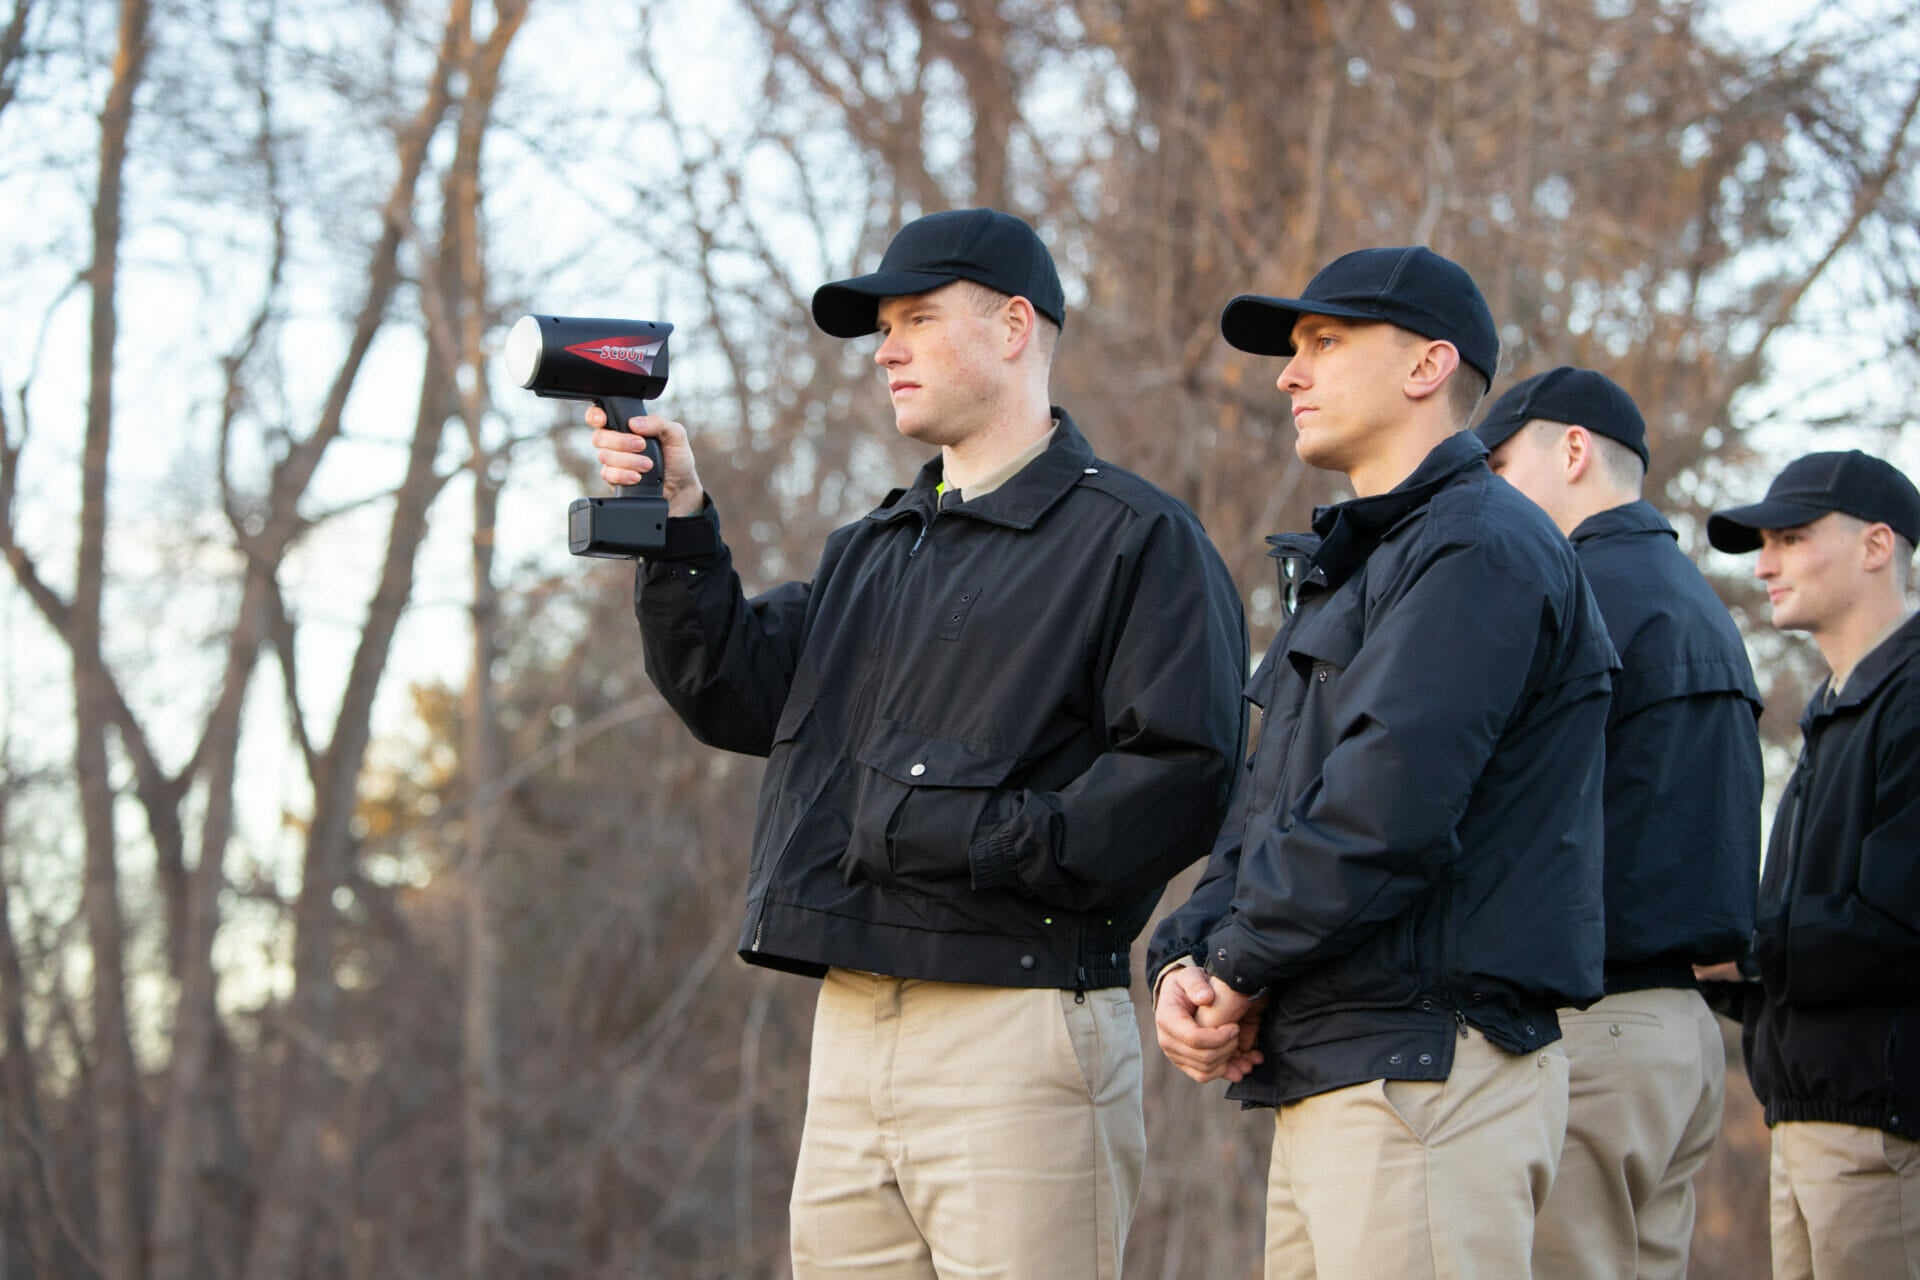 Police academy participants holding a speed gun